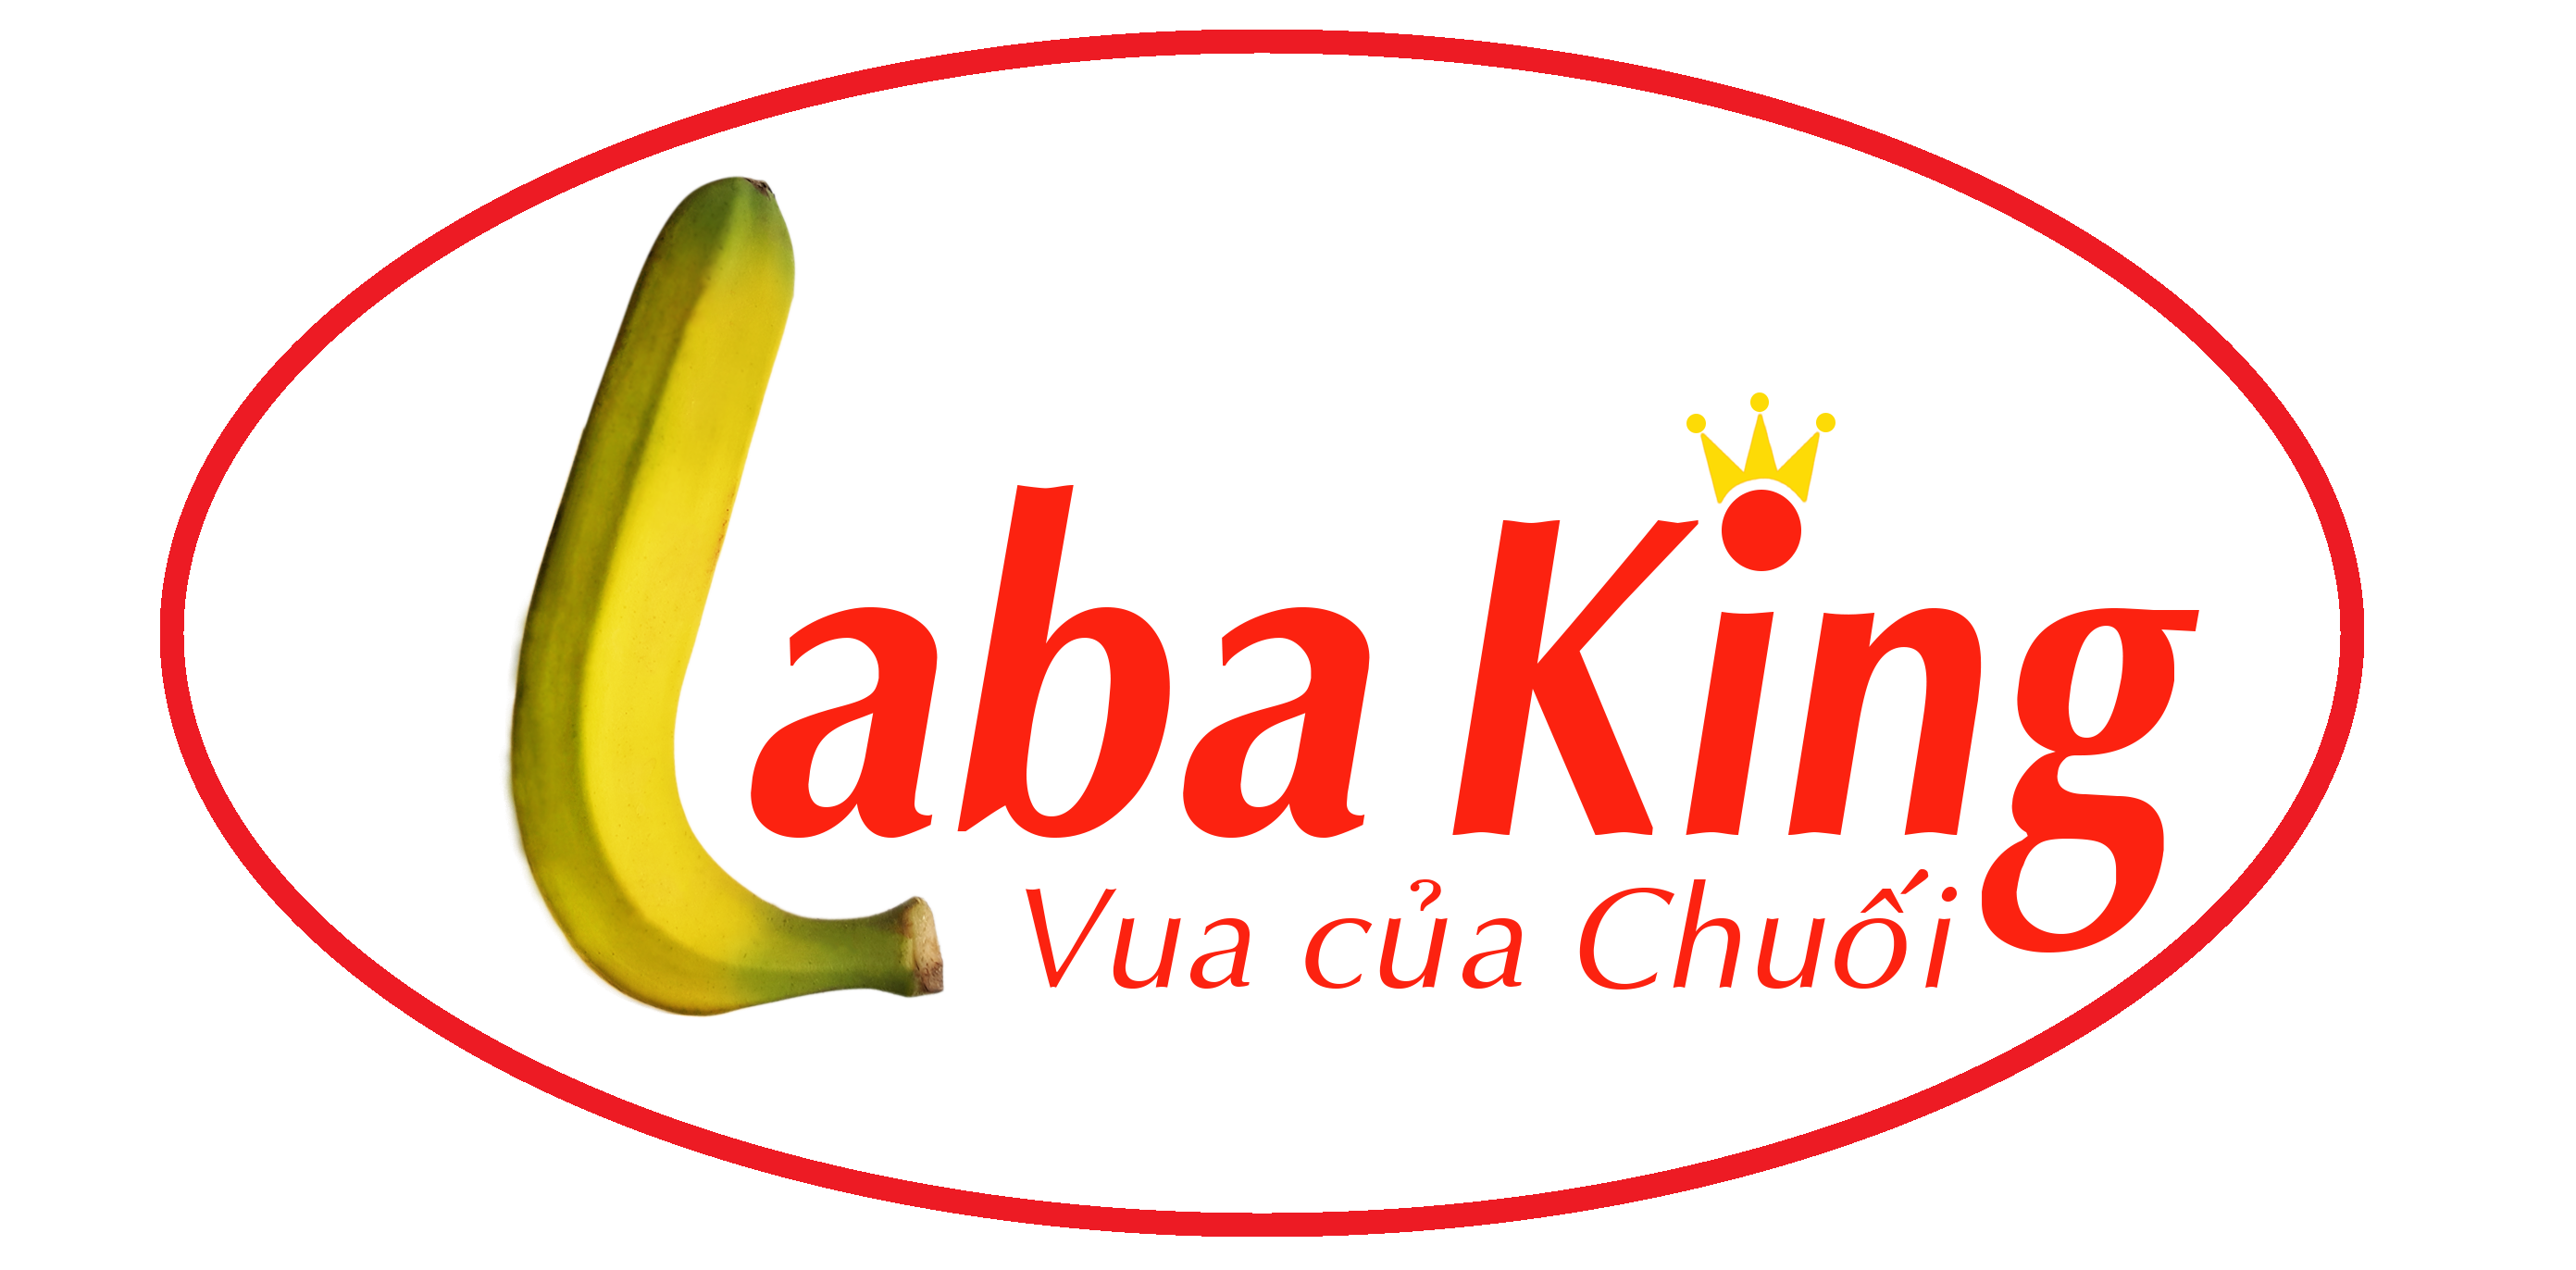 Ra mắt sản phẩm Chuối Laba cao cấp LABA KING